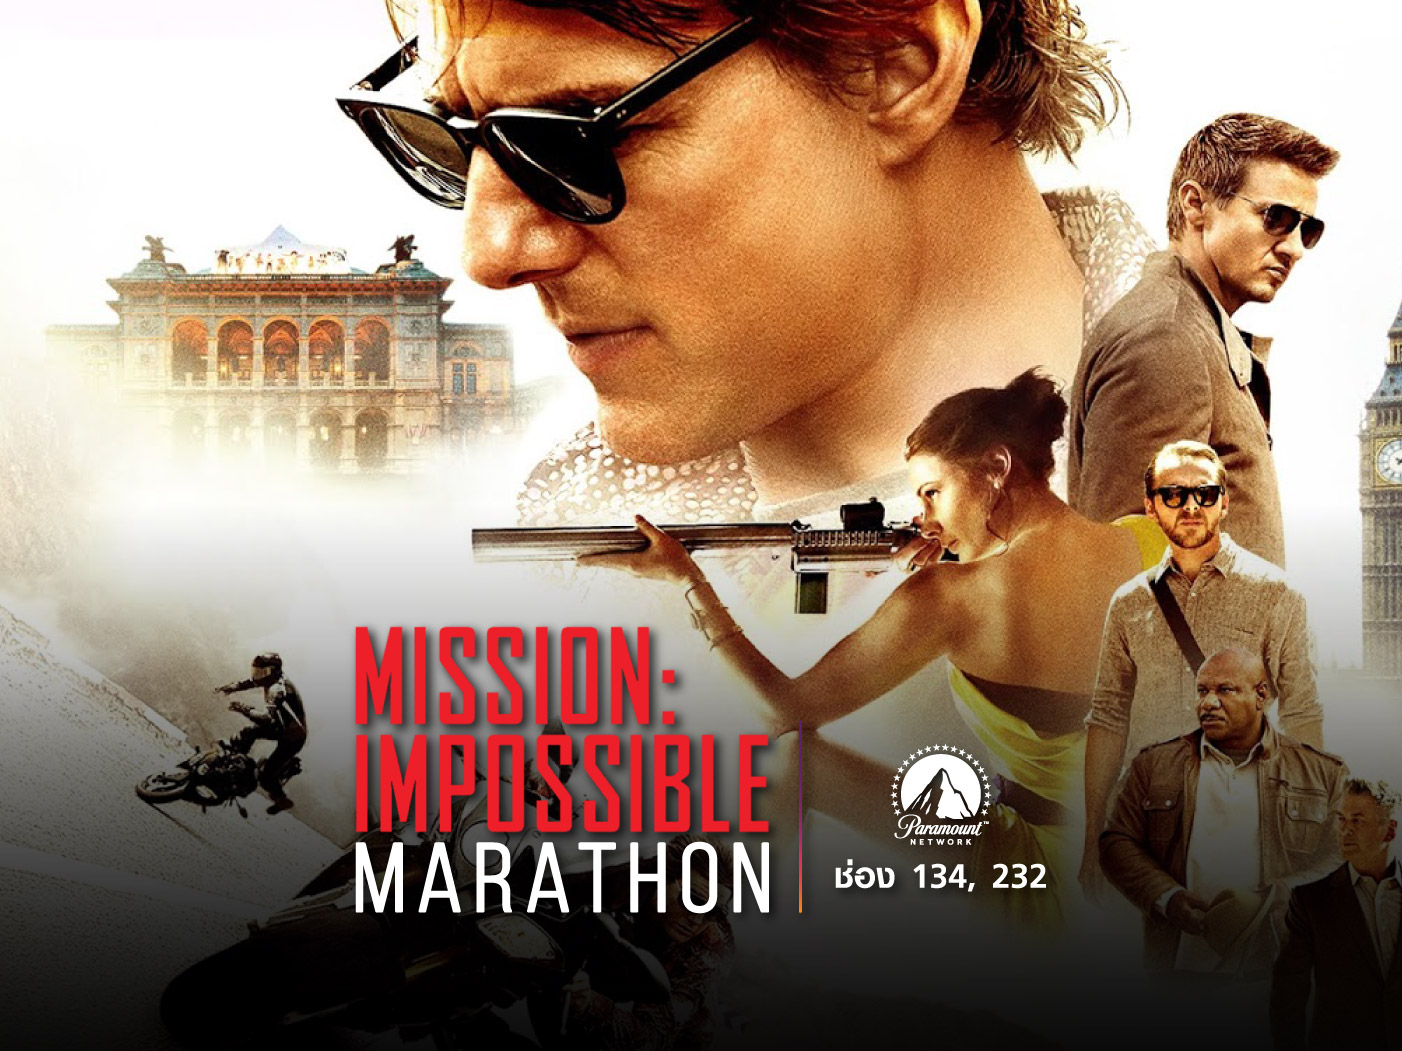 Mission: Impossible Marathon